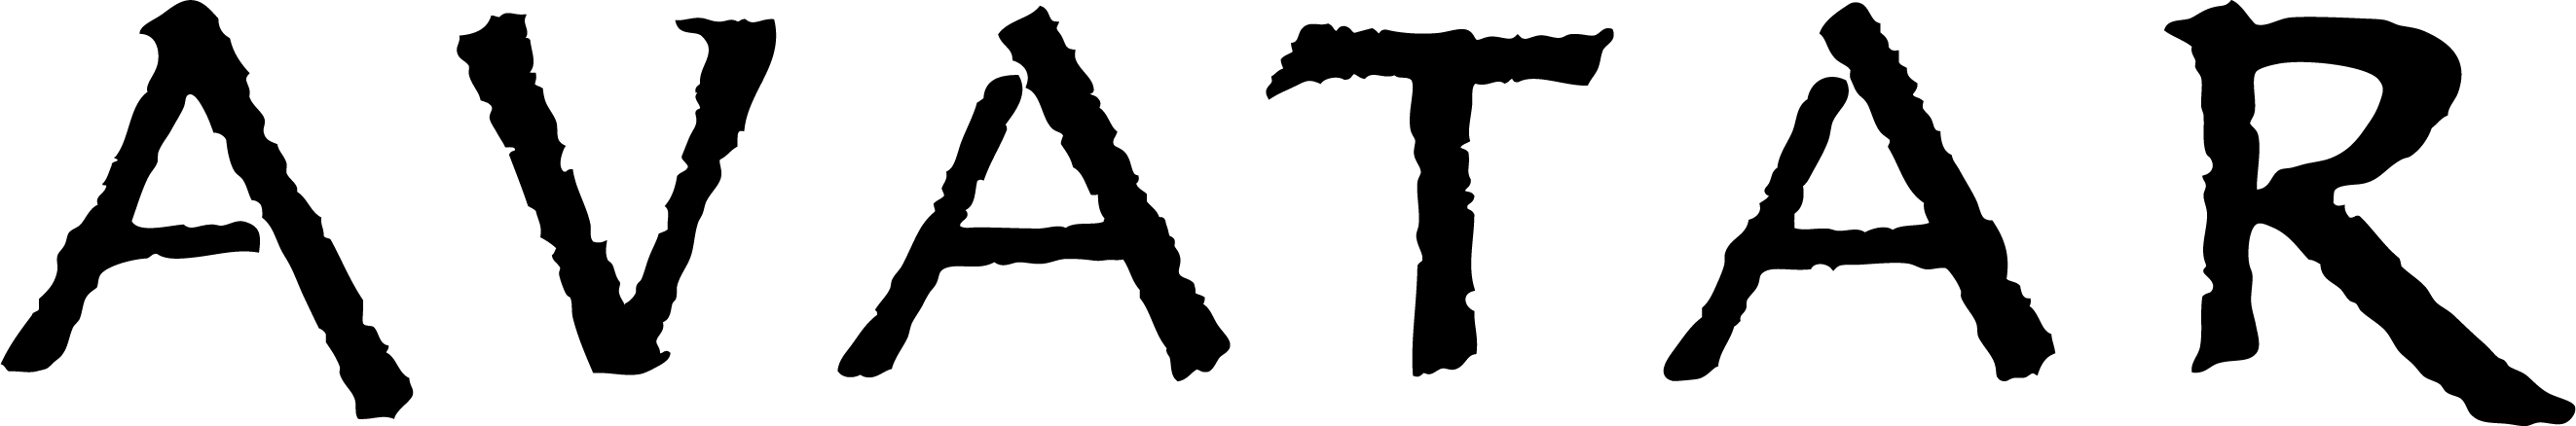 Avatar Logo (Film) png